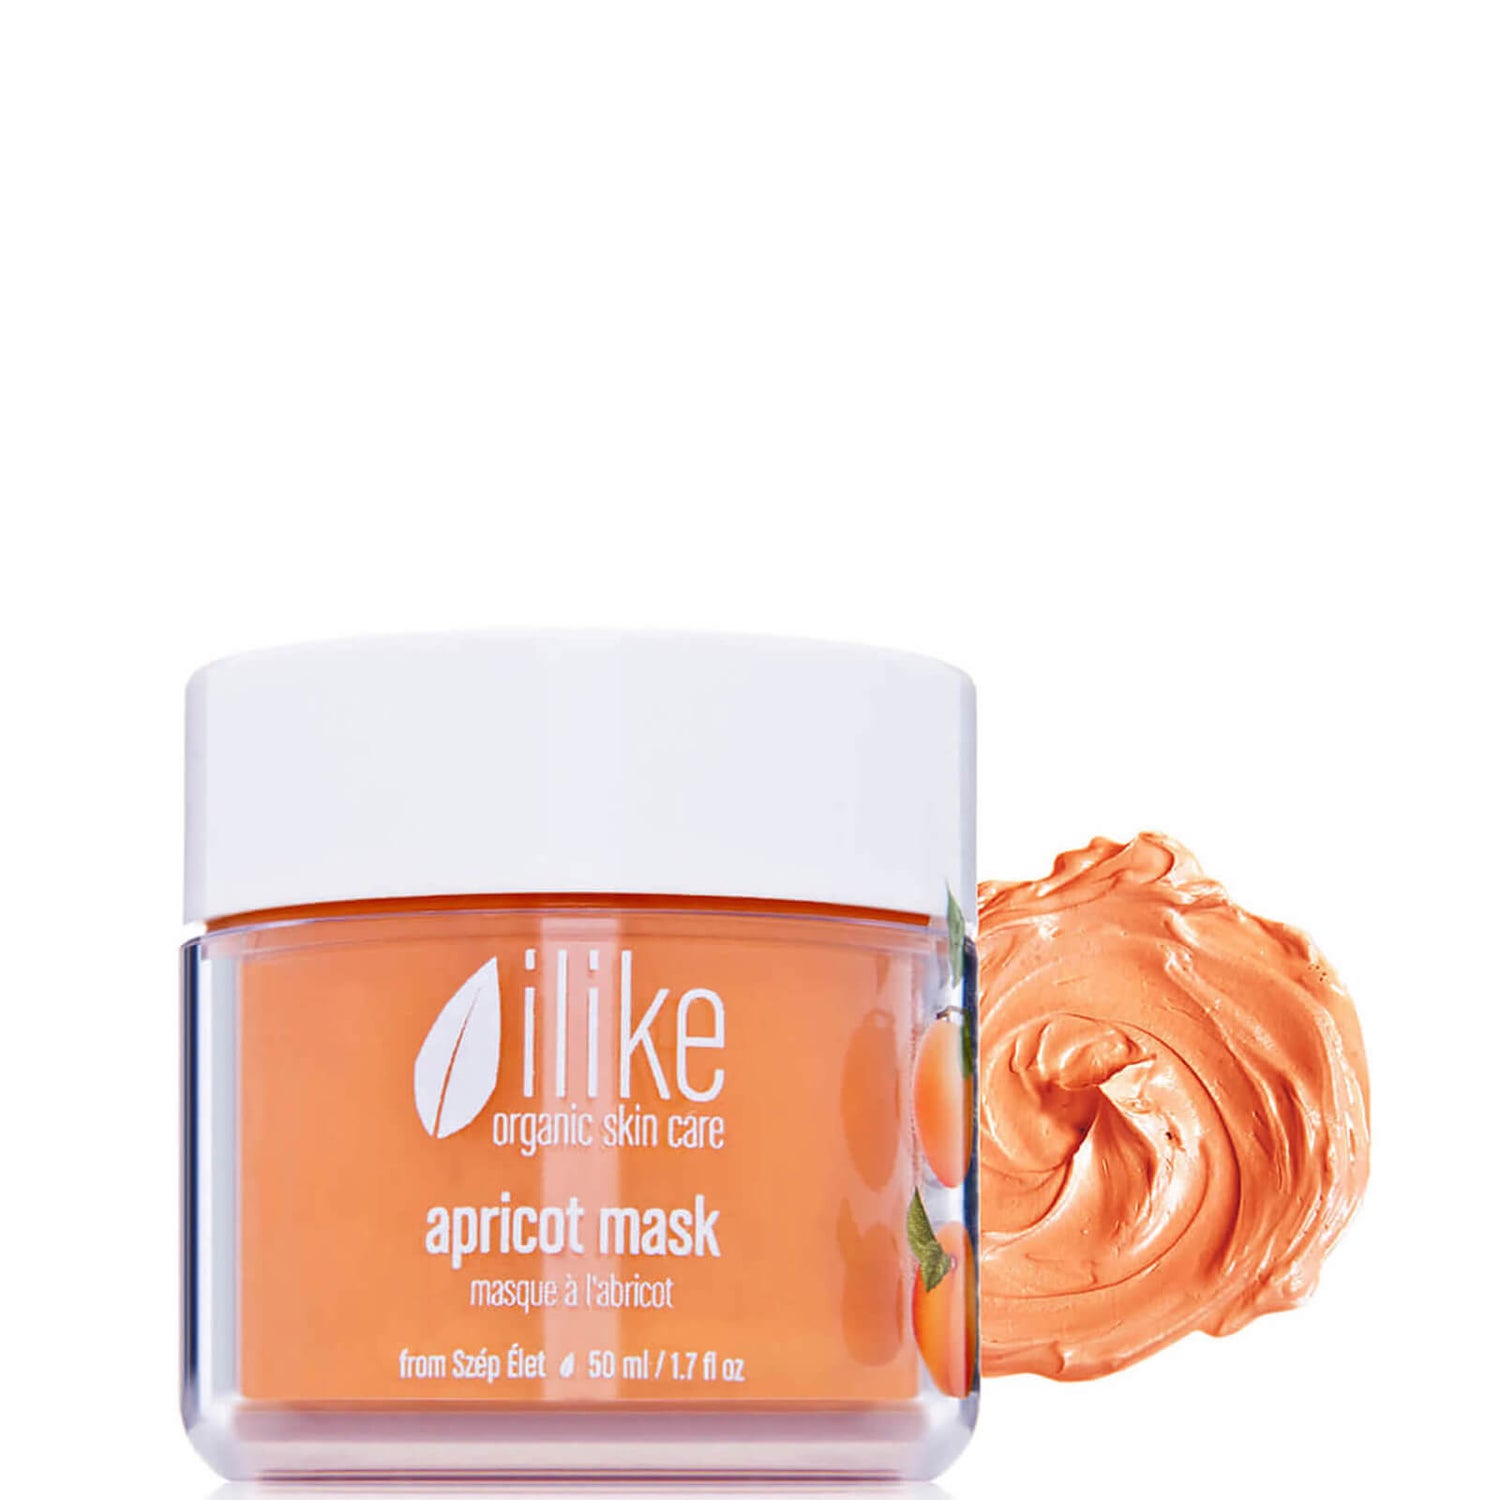 ilike organic skin care Apricot Mask (1.7 fl. oz.)